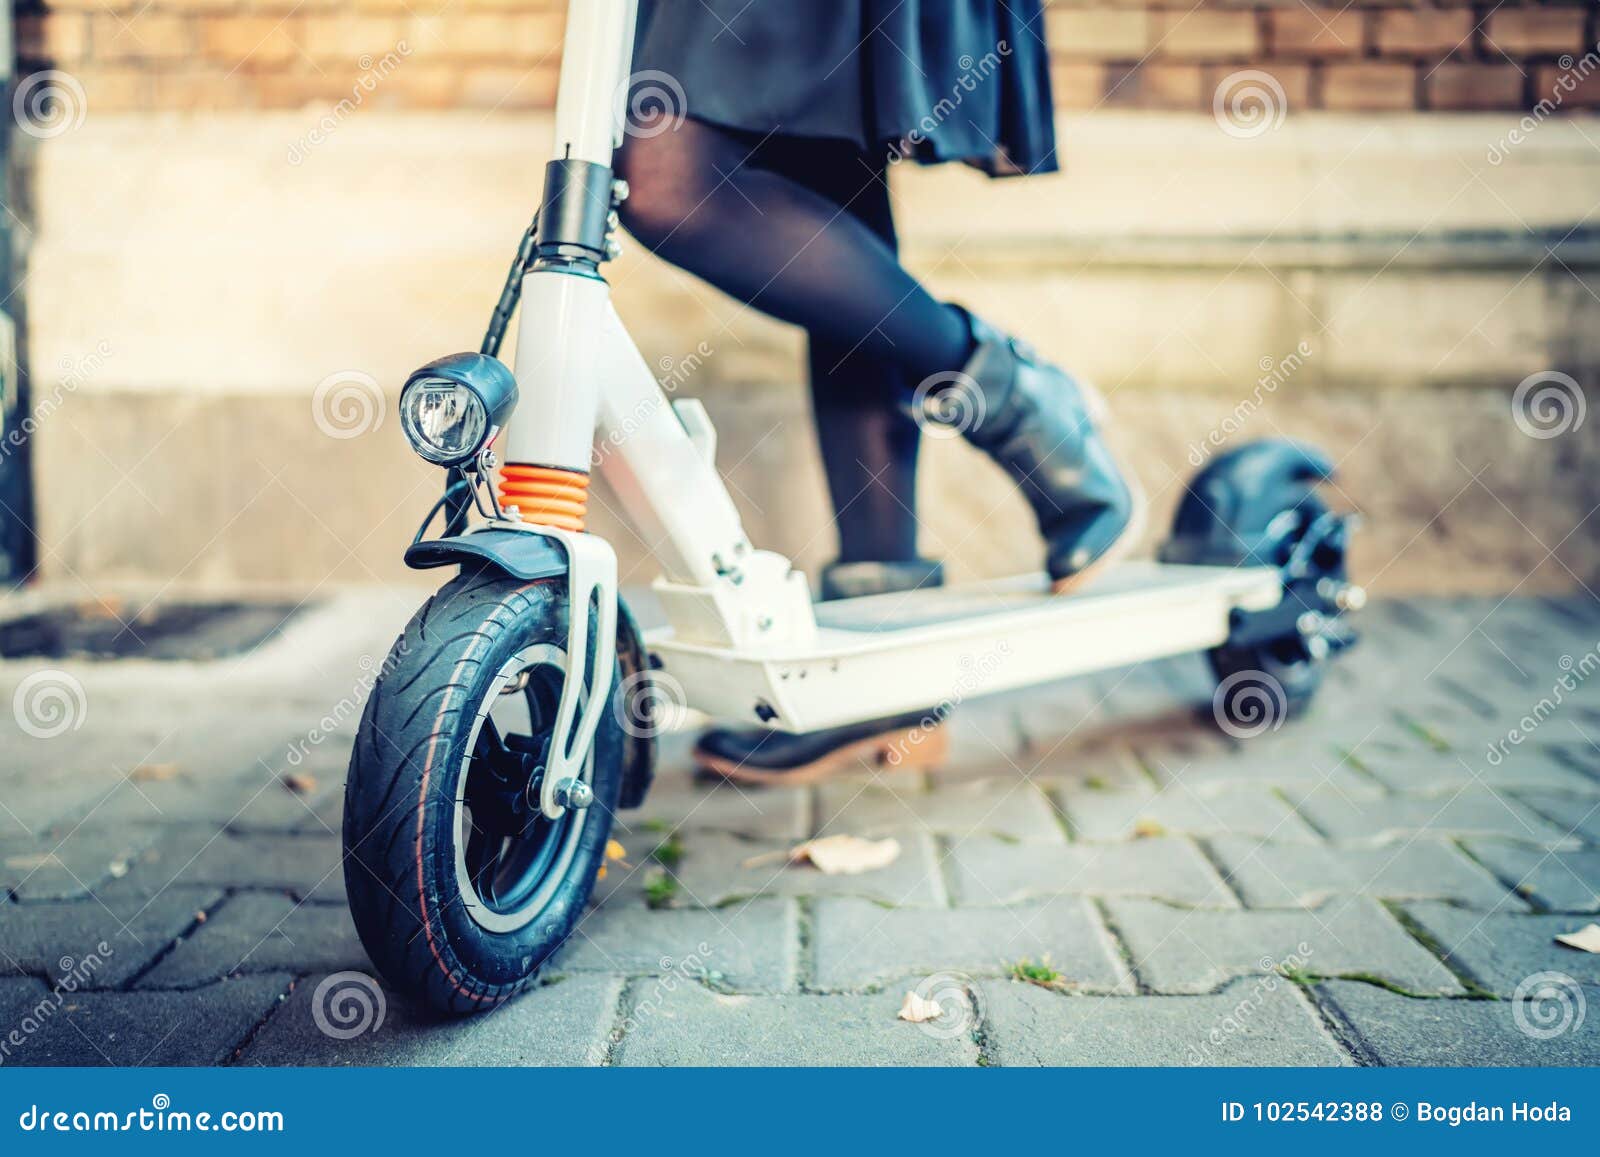 details of modern transportation, electric kick scooter, portrait of girl riding the city transportation